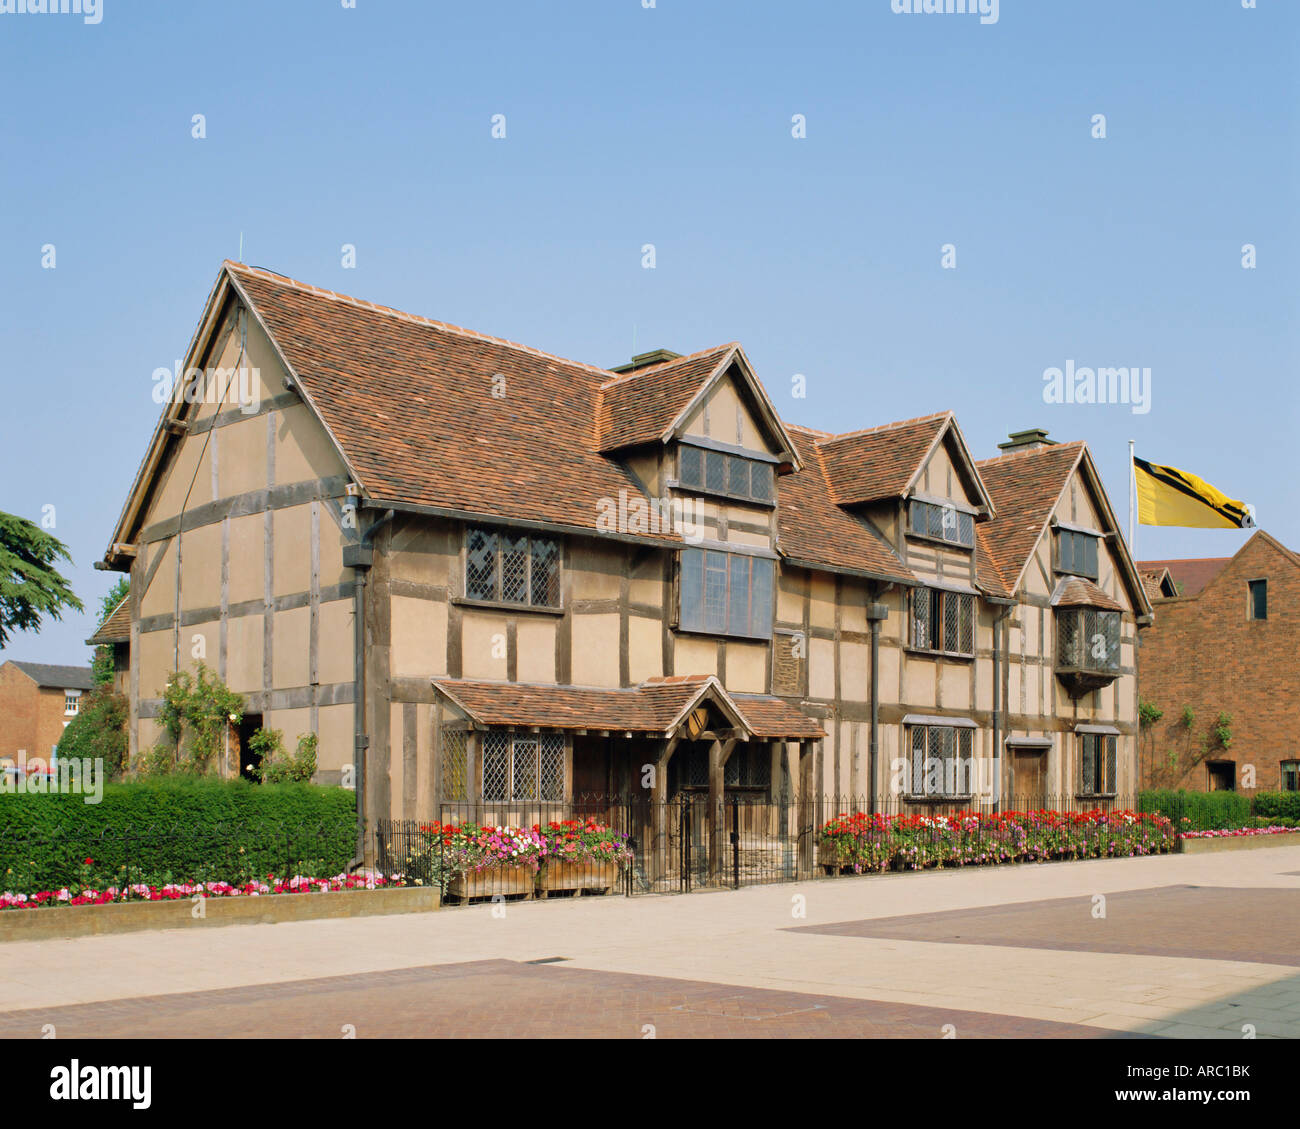 William Shakespeare's birthplace, Stratford-upon-Avon, Warwickshire, England, UK, Europe Stock Photo